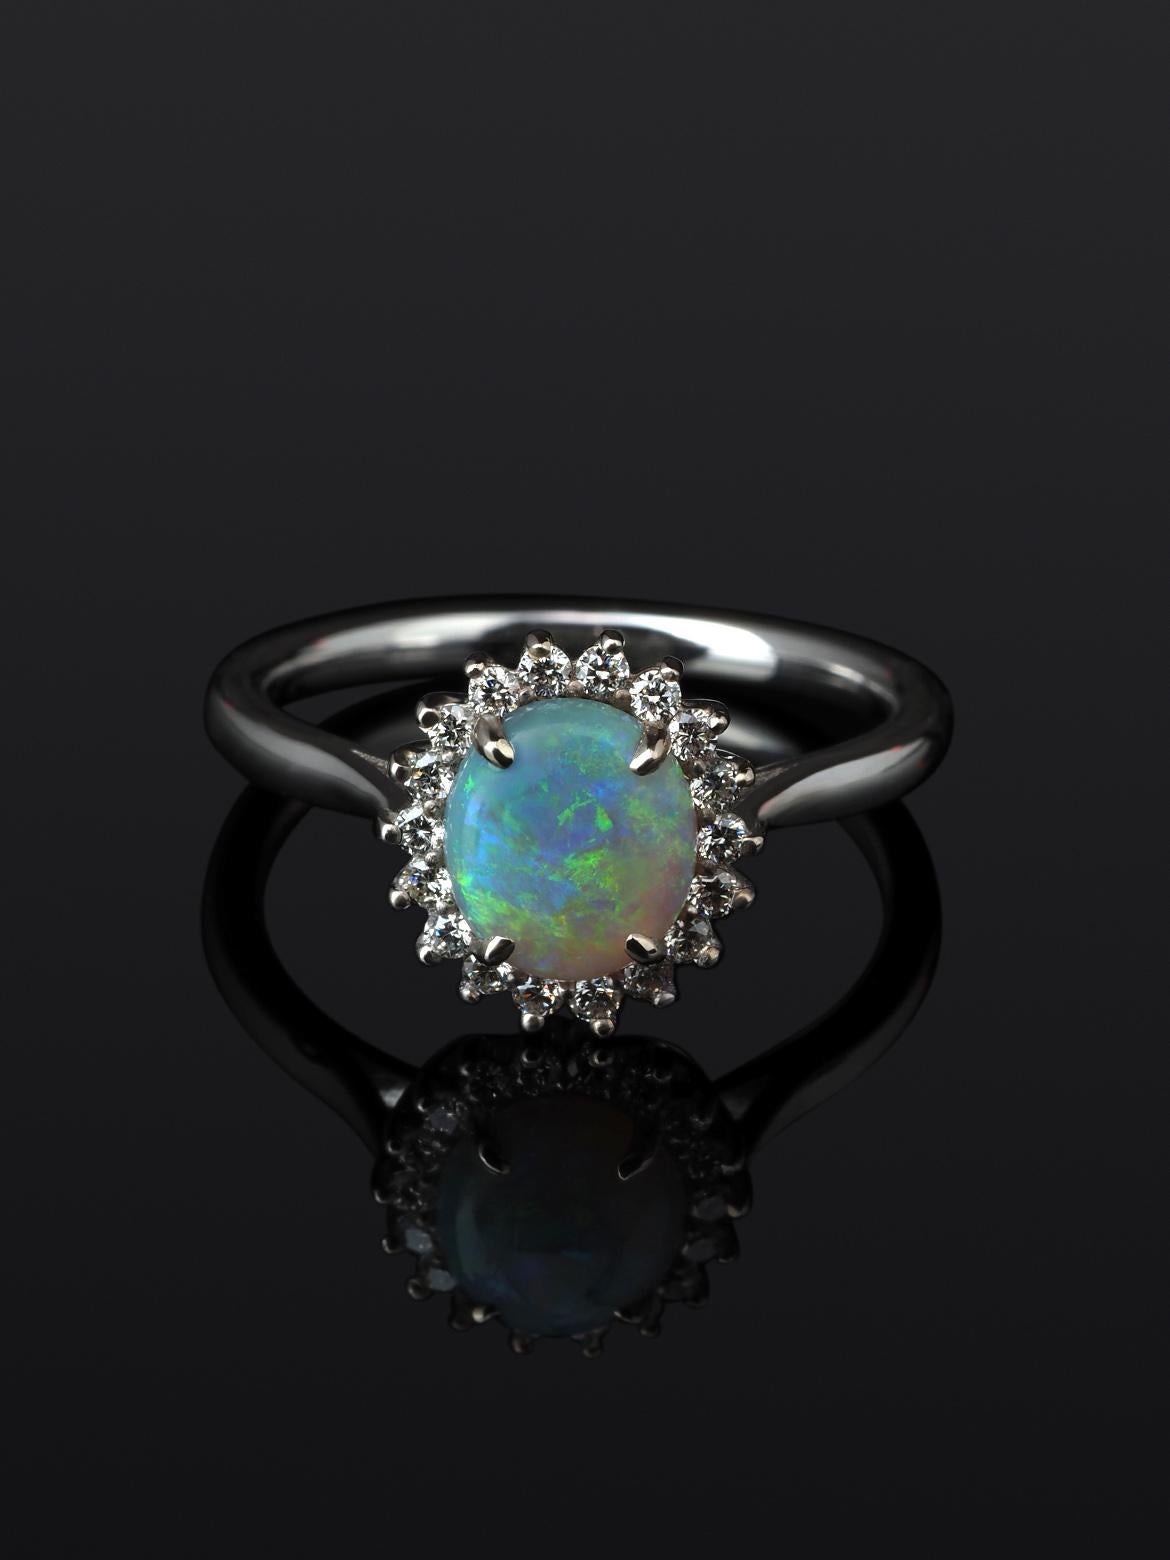 14K white gold ring with natural opal and diamonds
opal origin - Australia 
opal measurements - 0.079 х 0.28 х 0.31  in / 2 х 7 х 8 mm
stone weight - 0.81 carats
diamonds weight - 0.20 carats
ring size - 6.5 US (this ring may be resized, please